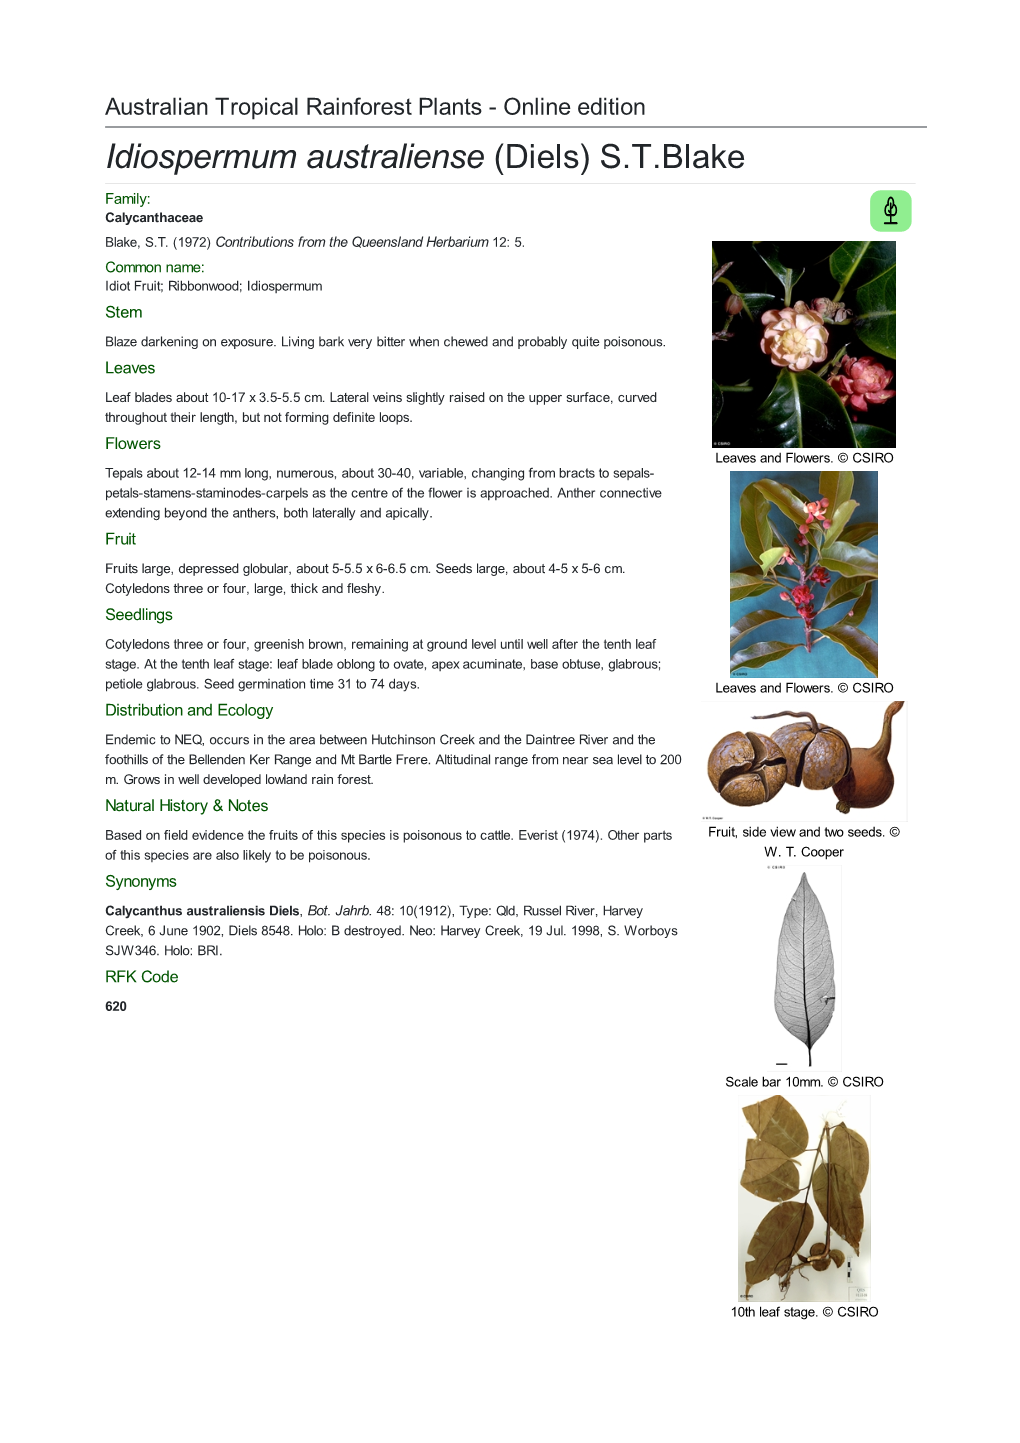 Idiospermum Australiense (Diels) S.T.Blake Family: Calycanthaceae Blake, S.T